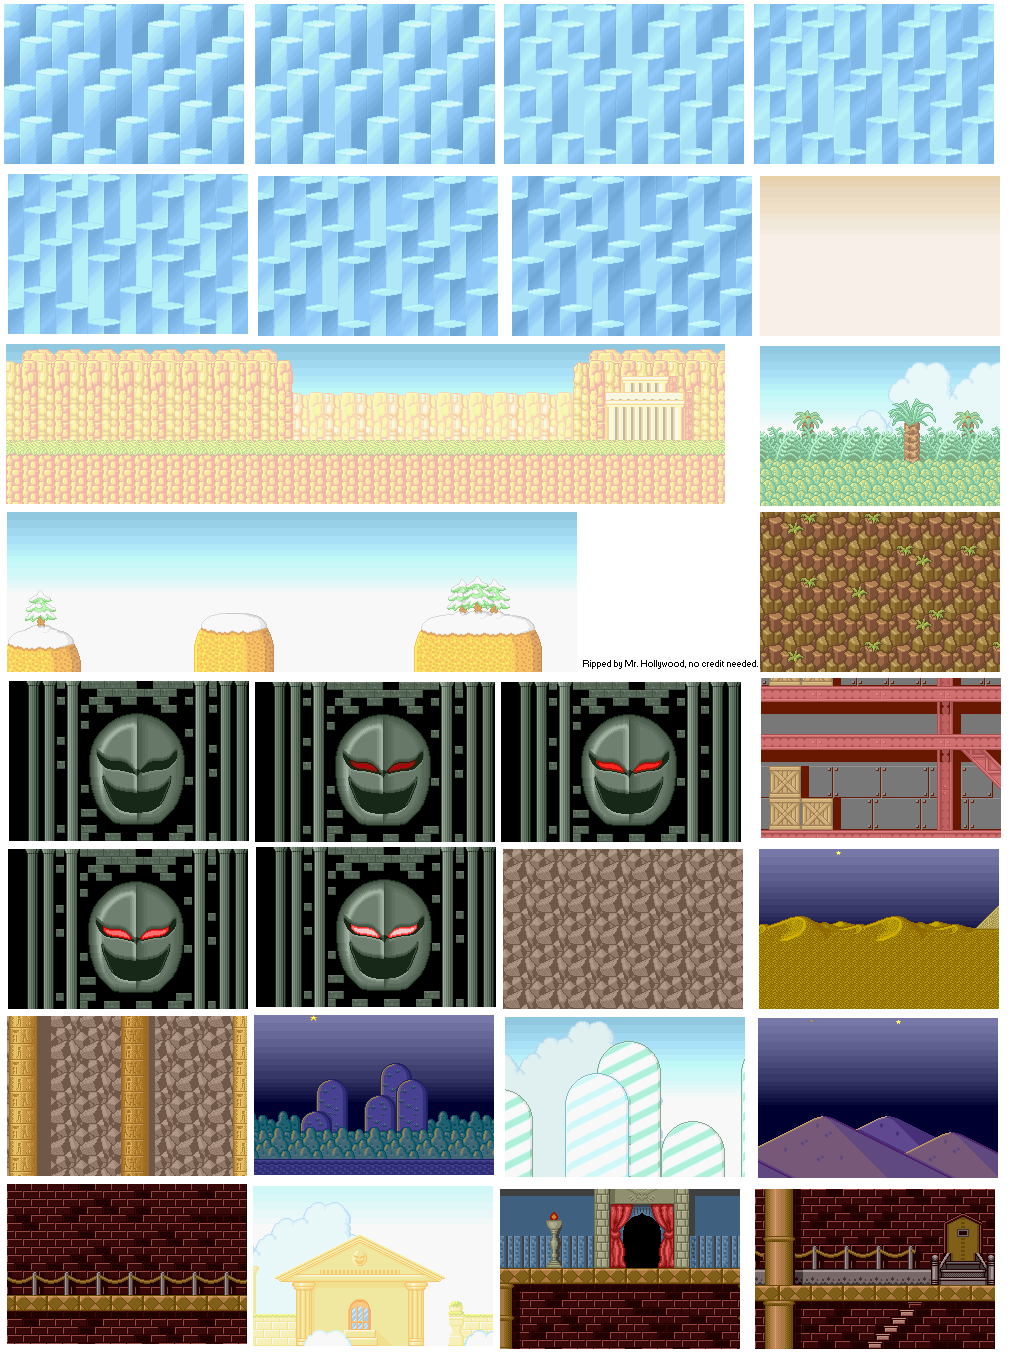 Super Mario Advance - Backgrounds